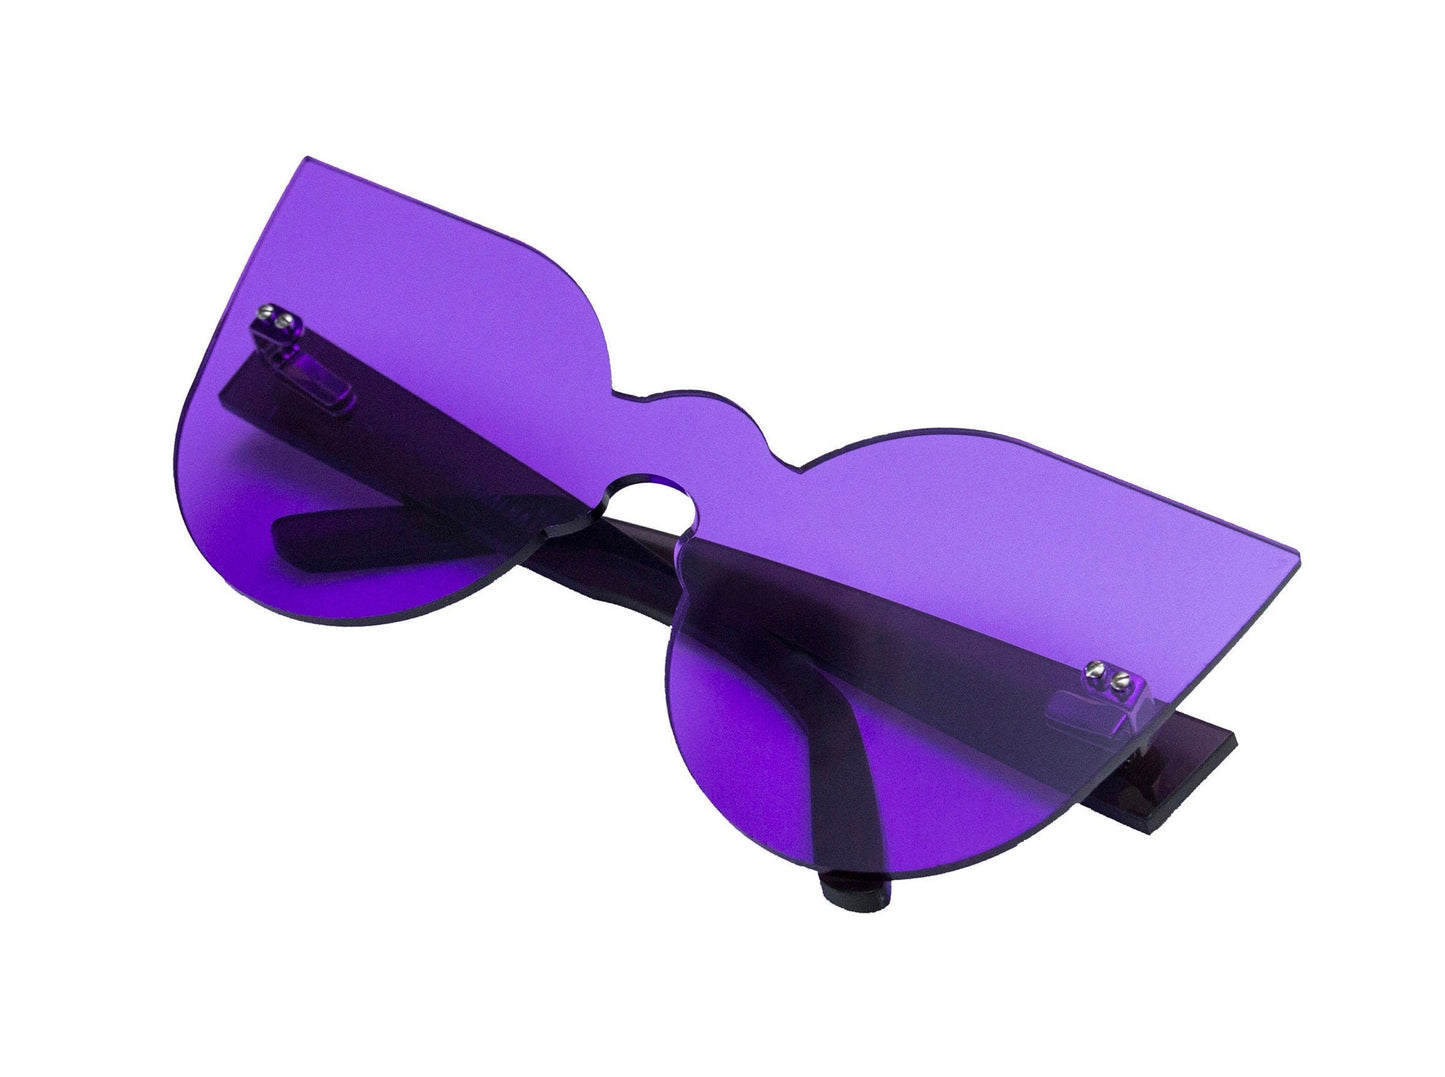 Purple Cat Eye Glasses